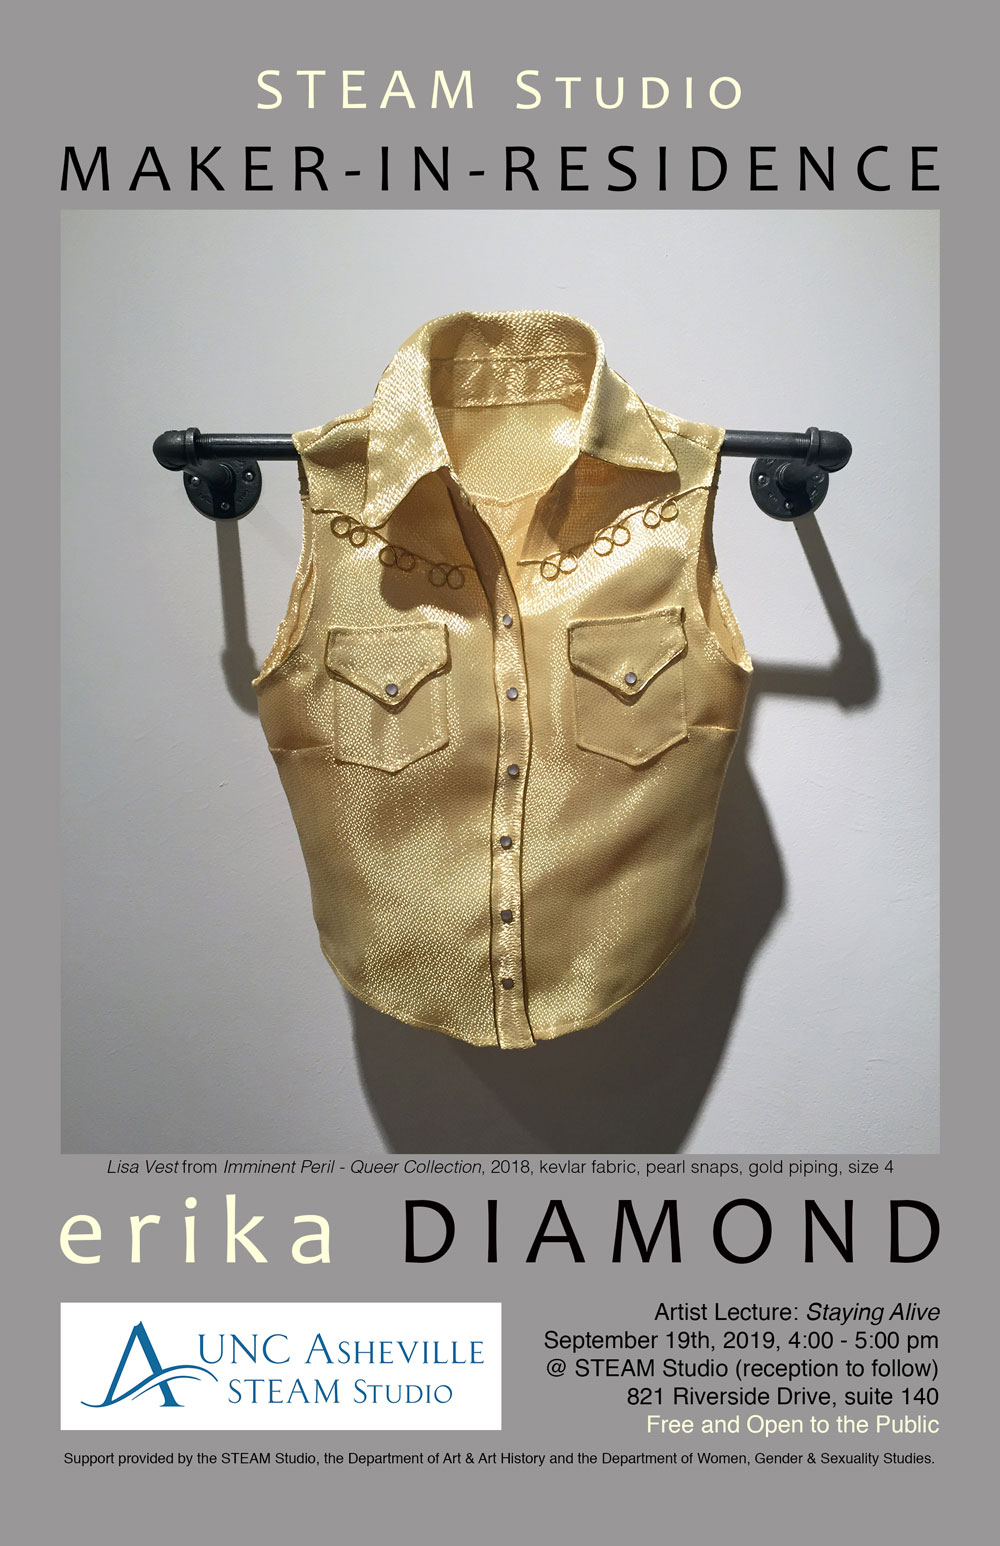 Erika Diamond lecture poster